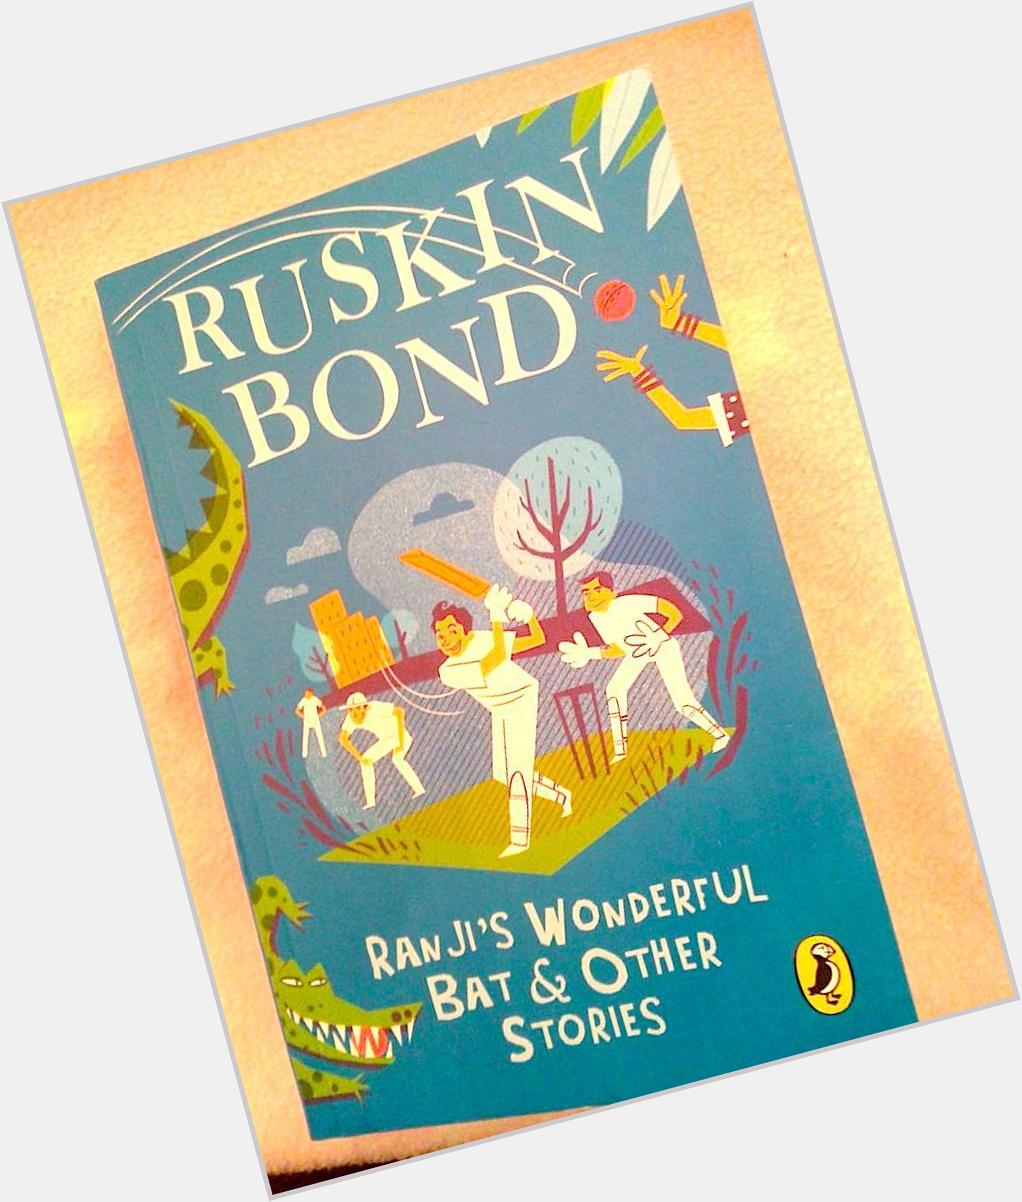 Happy Birthday Mr. Ruskin Bond!
We love your books!  